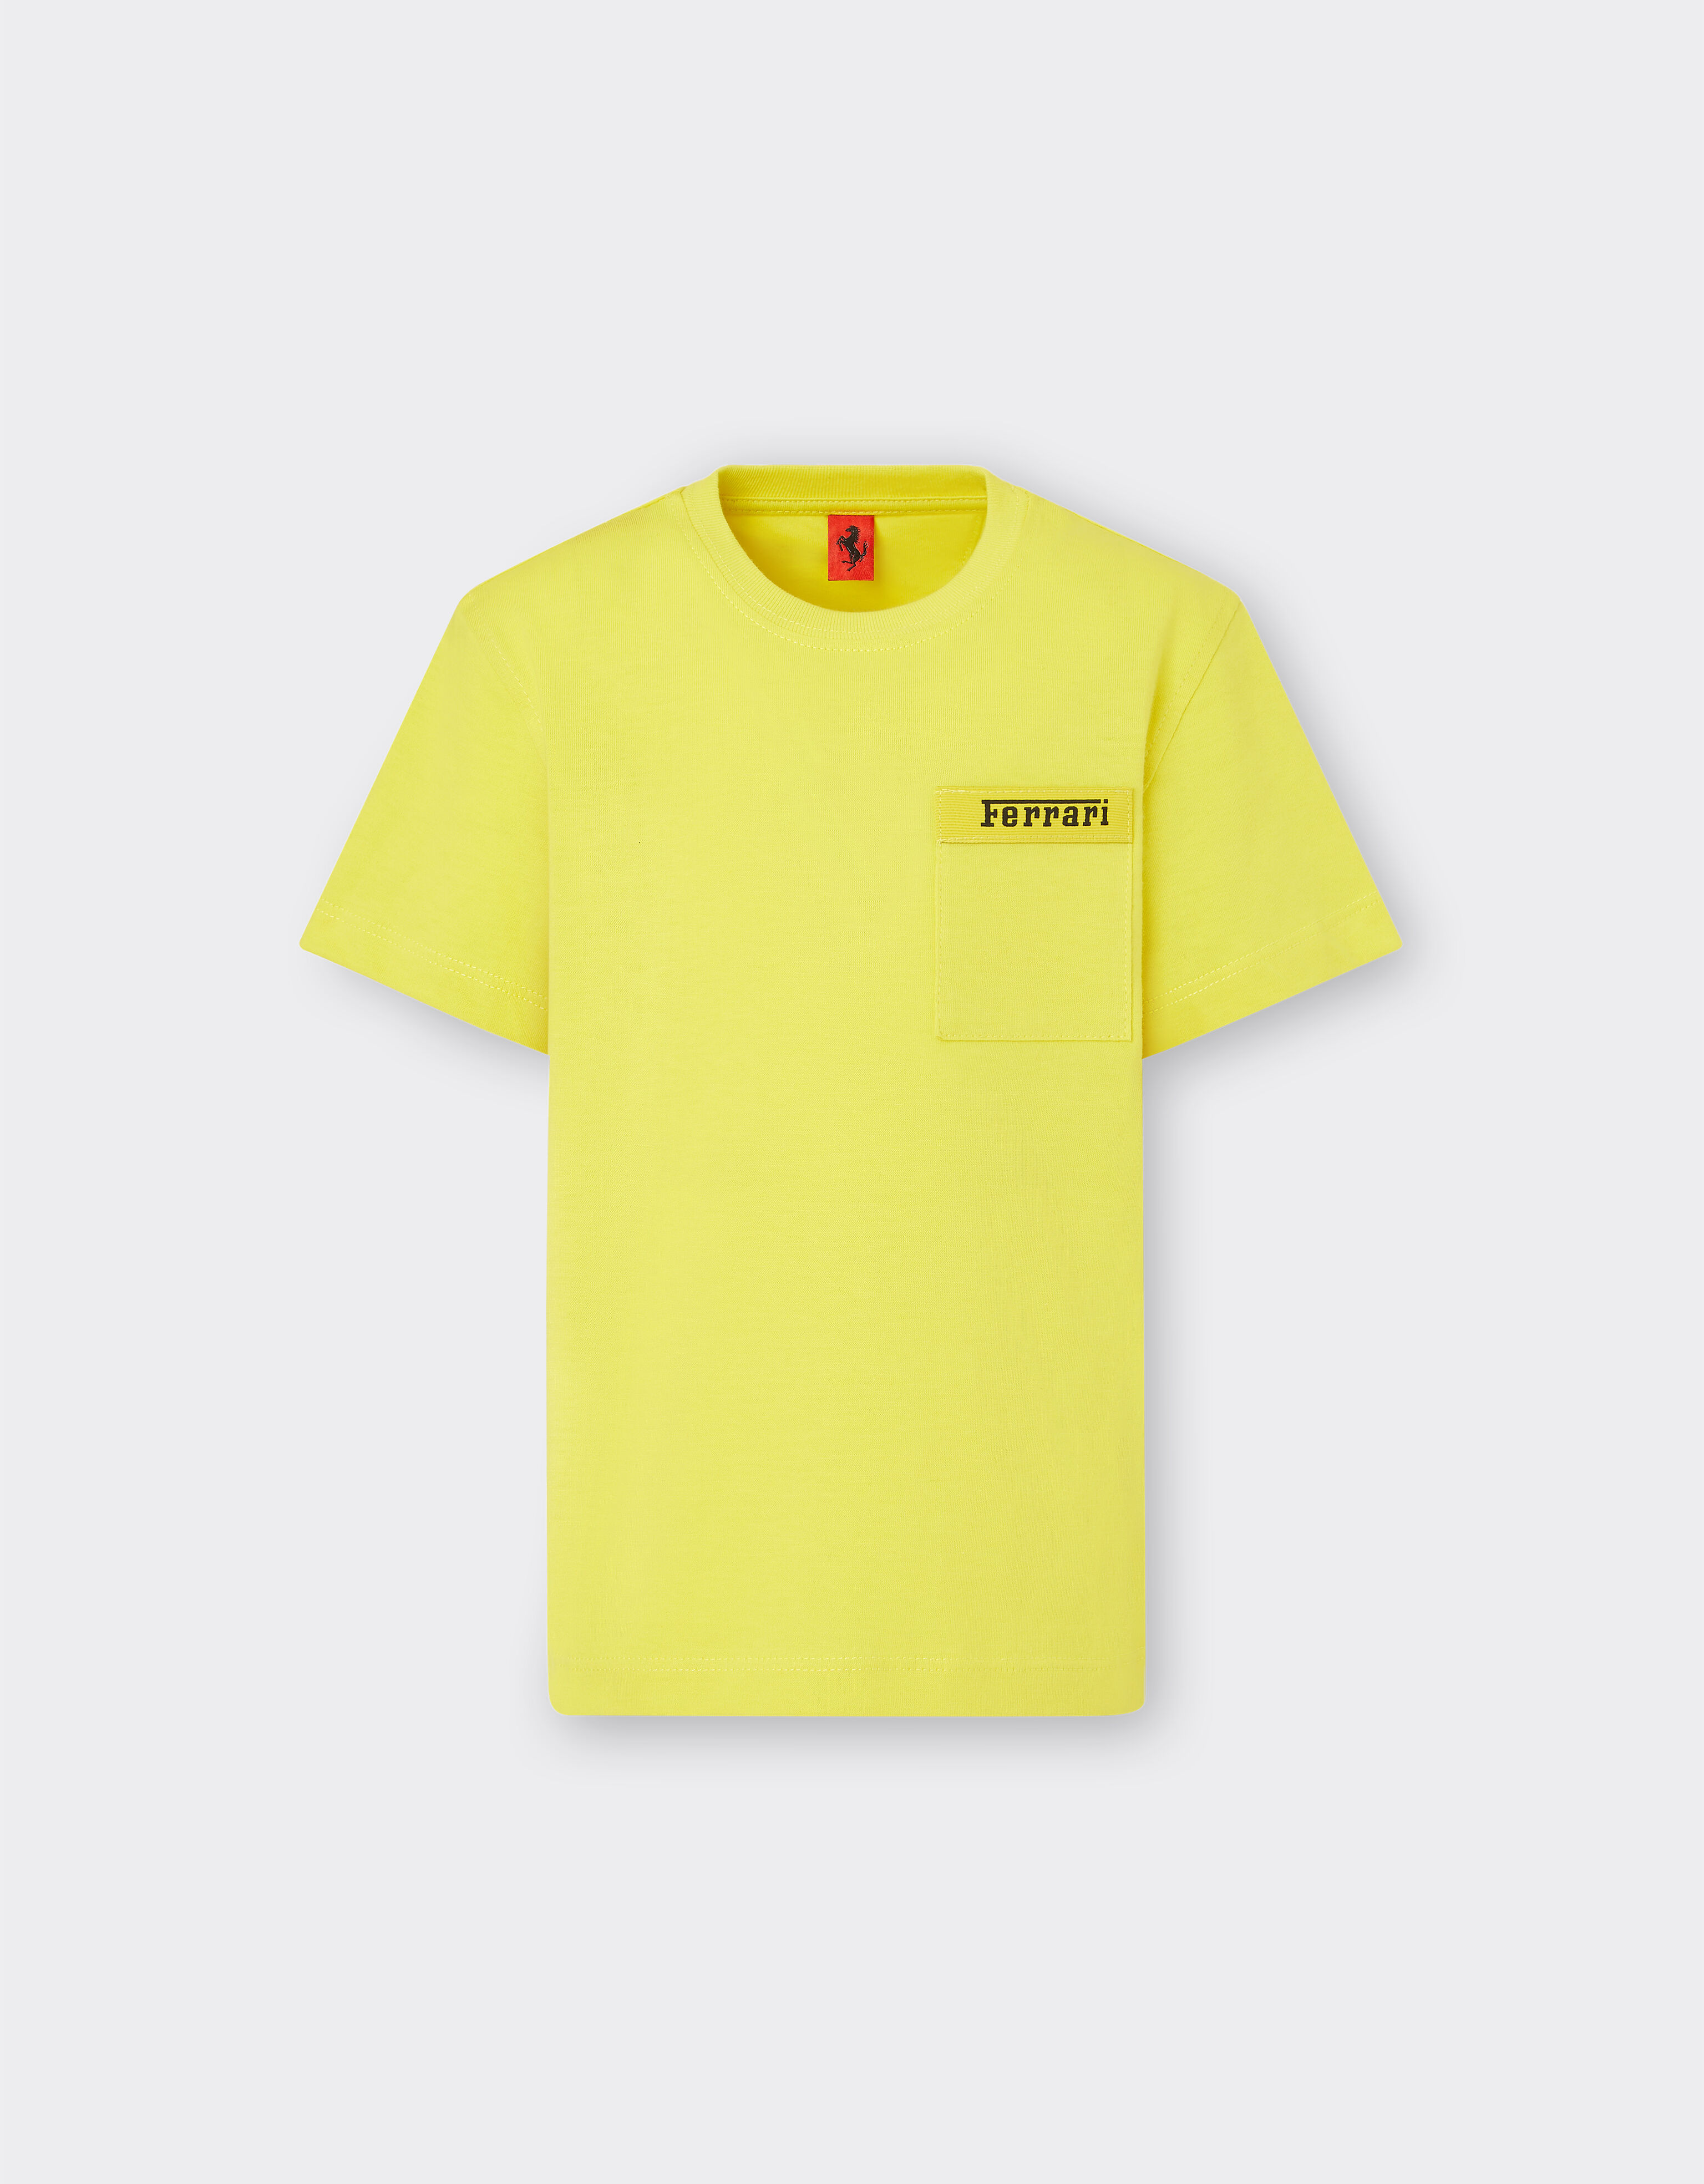 Ferrari Cotton T-shirt with Ferrari logo Giallo Modena 20162fK